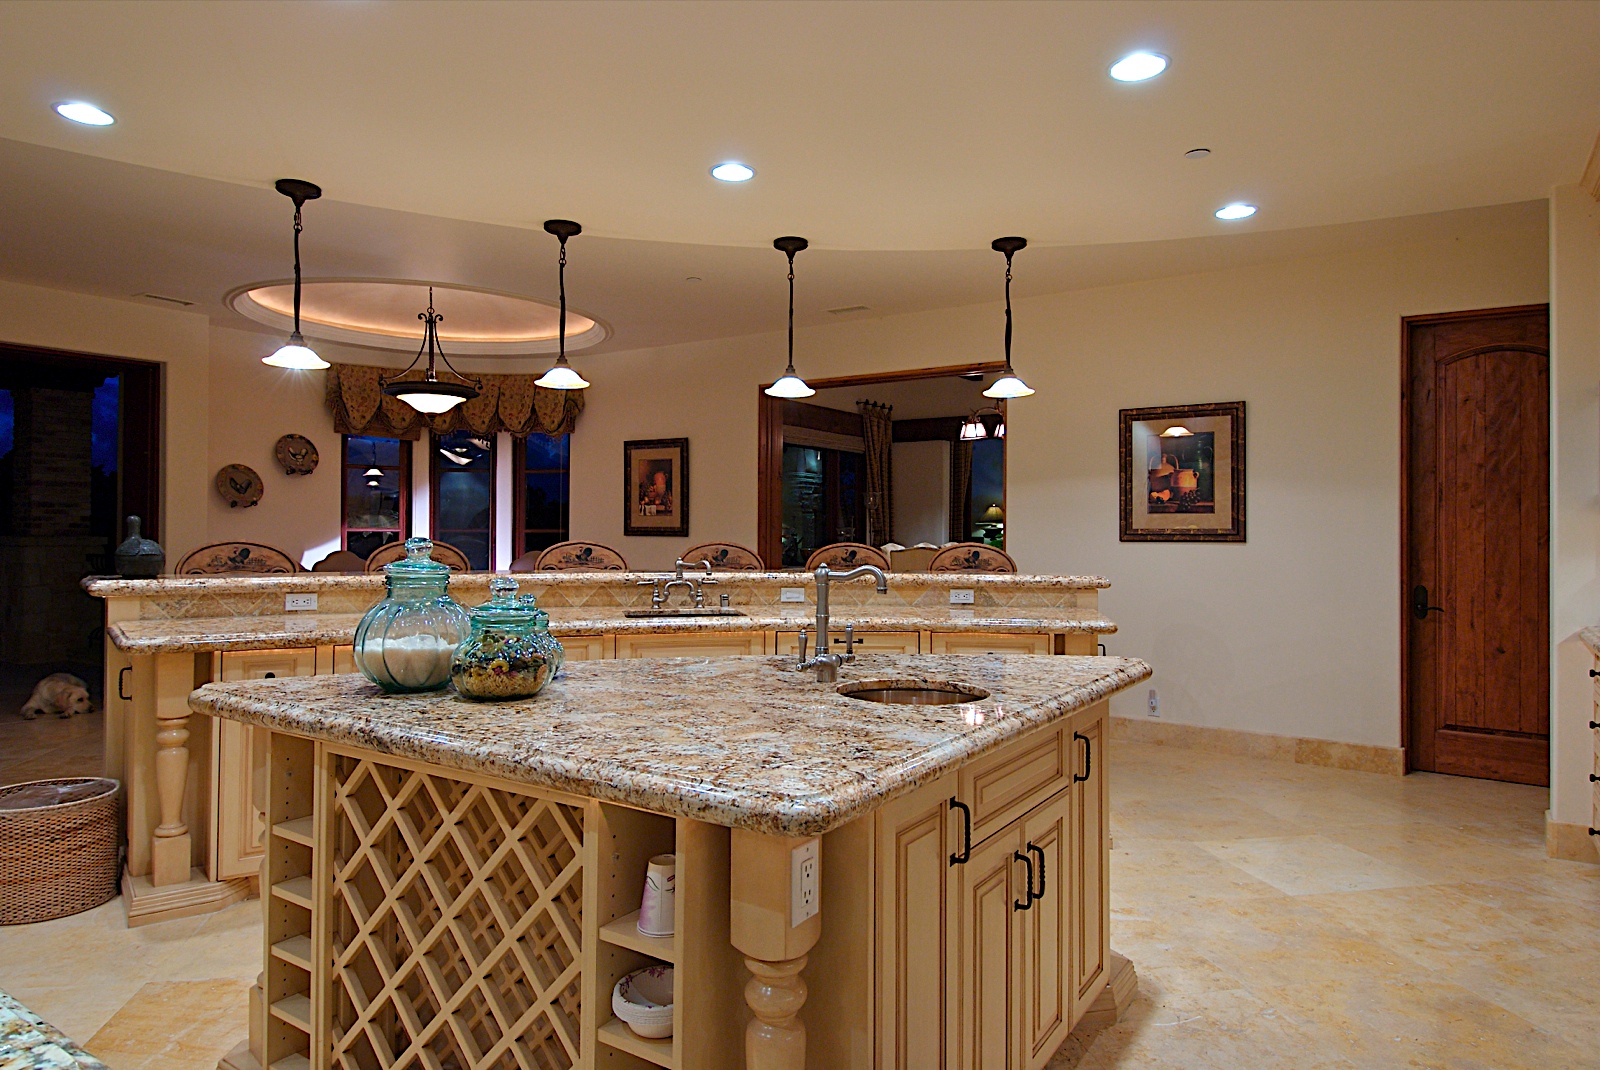 grand design kitchen lighting